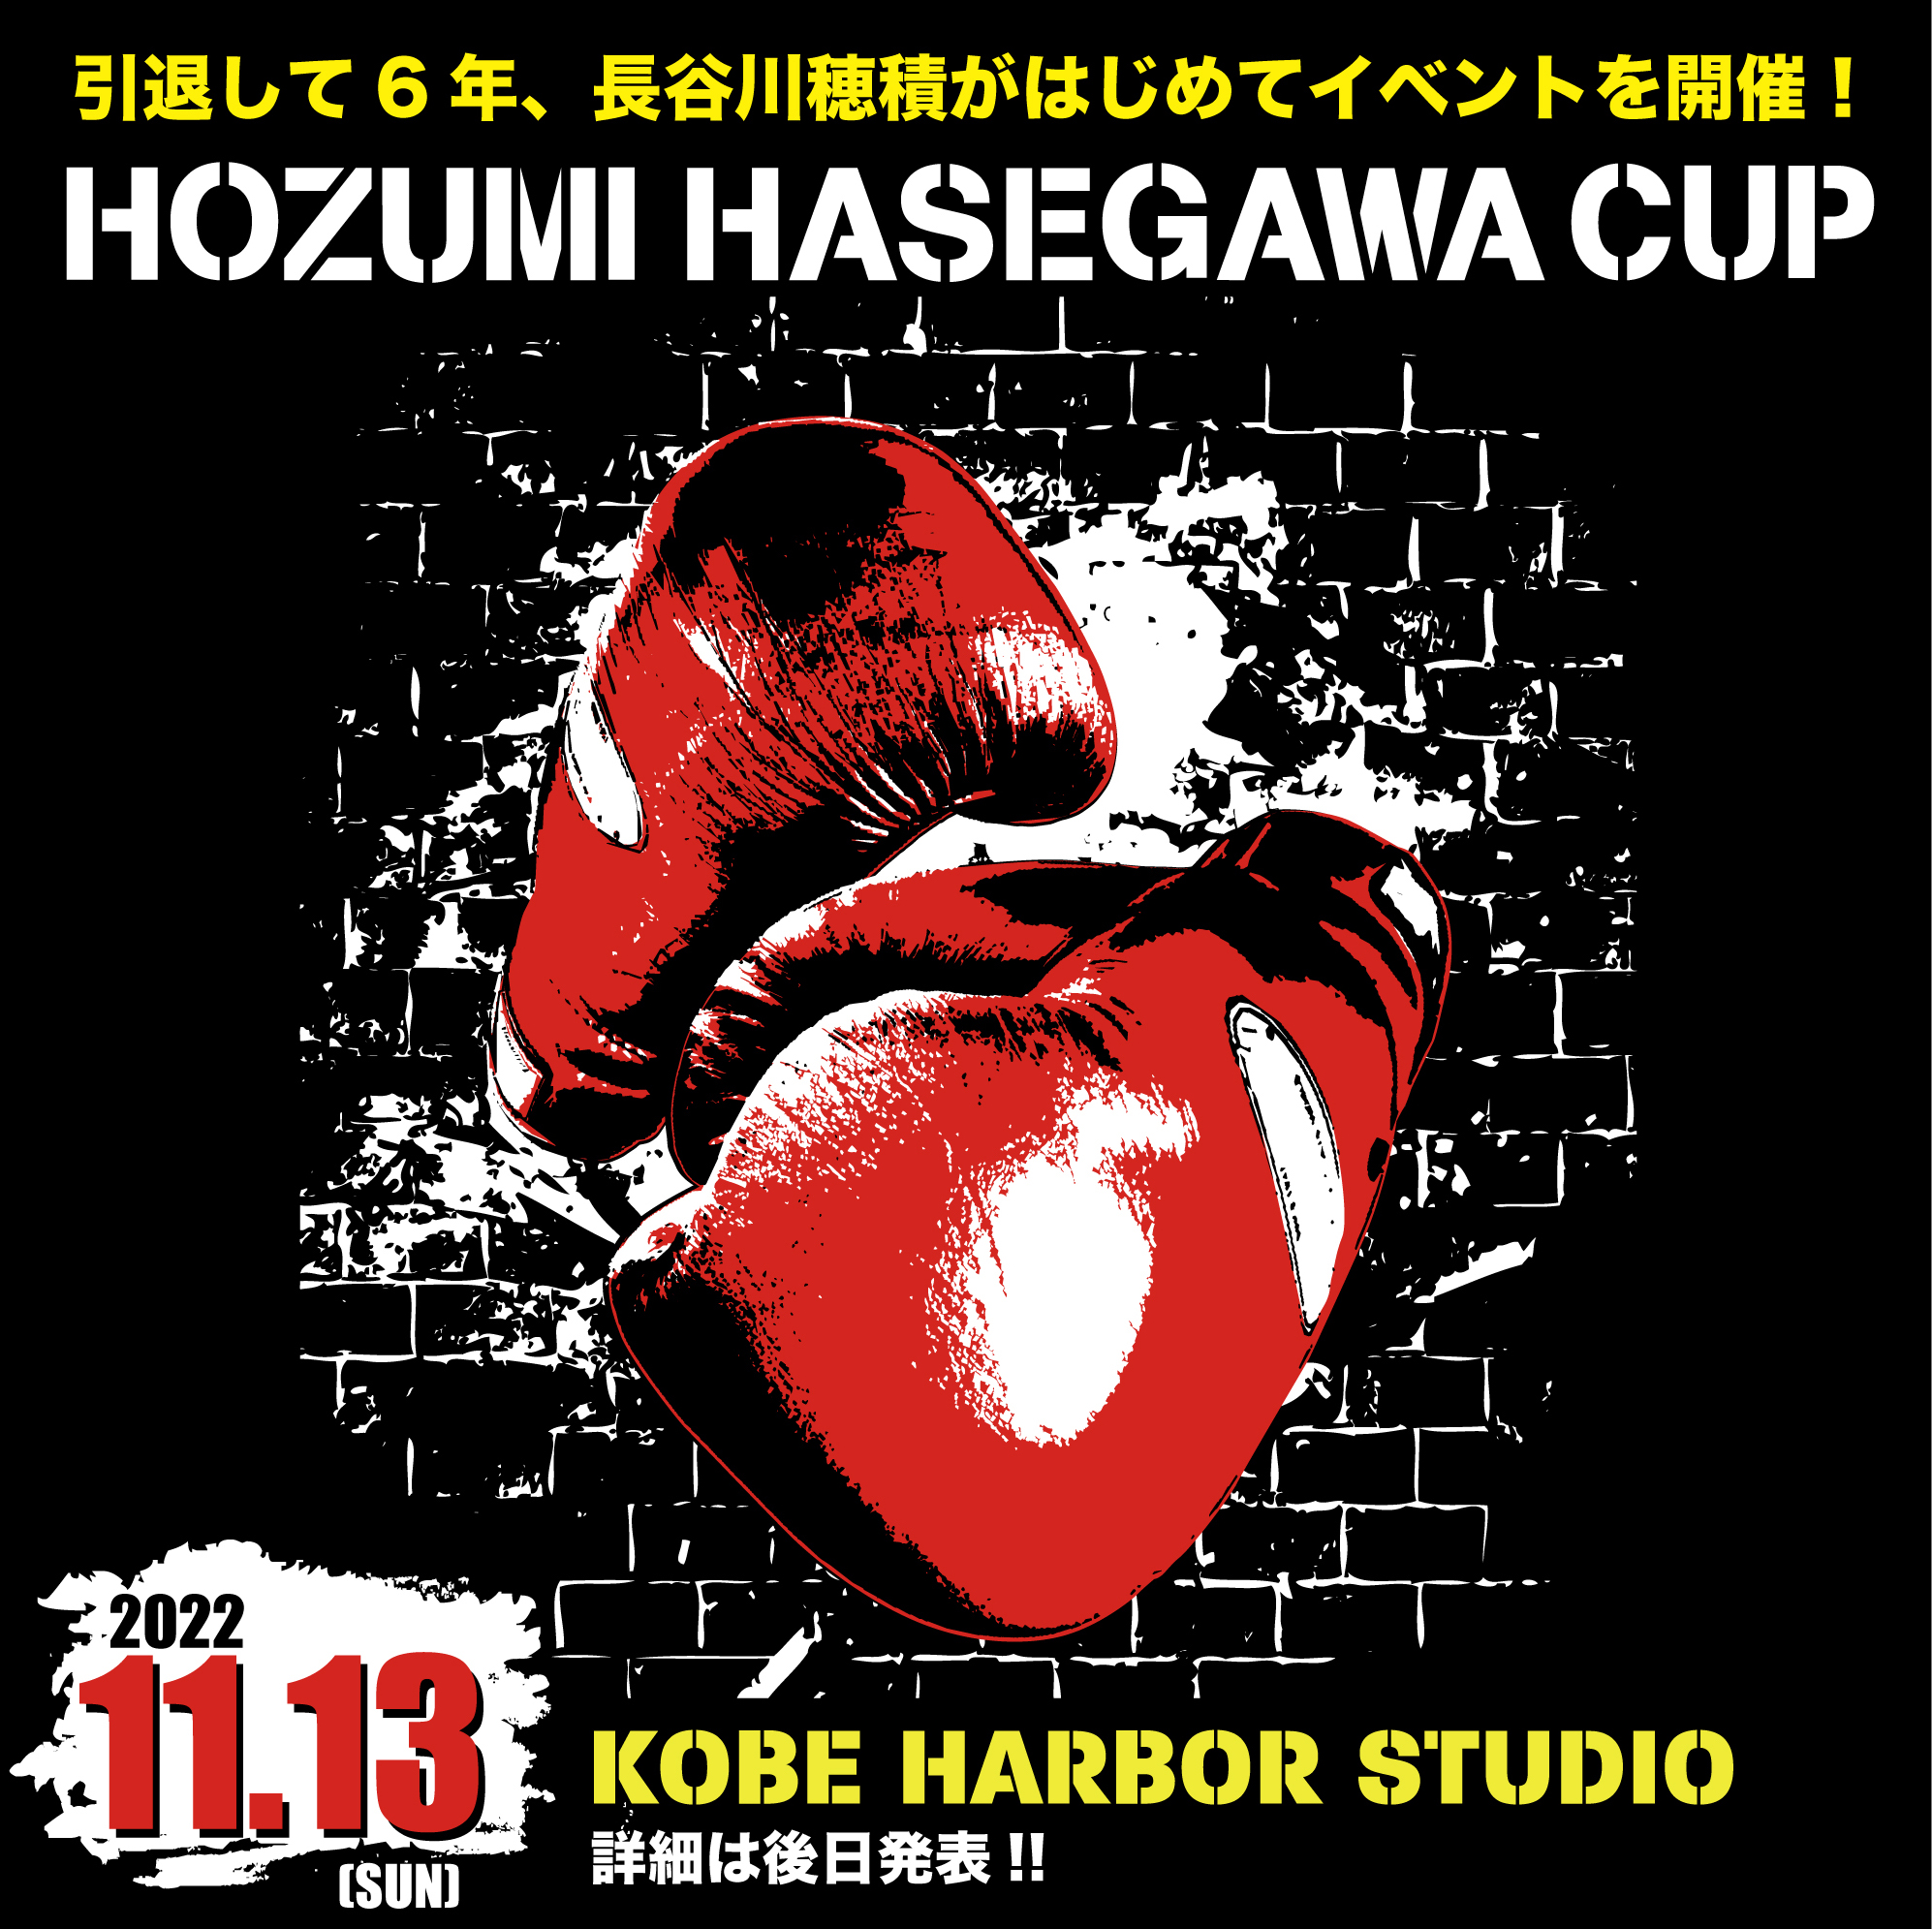 HOZUMI HASEGAWA CUP